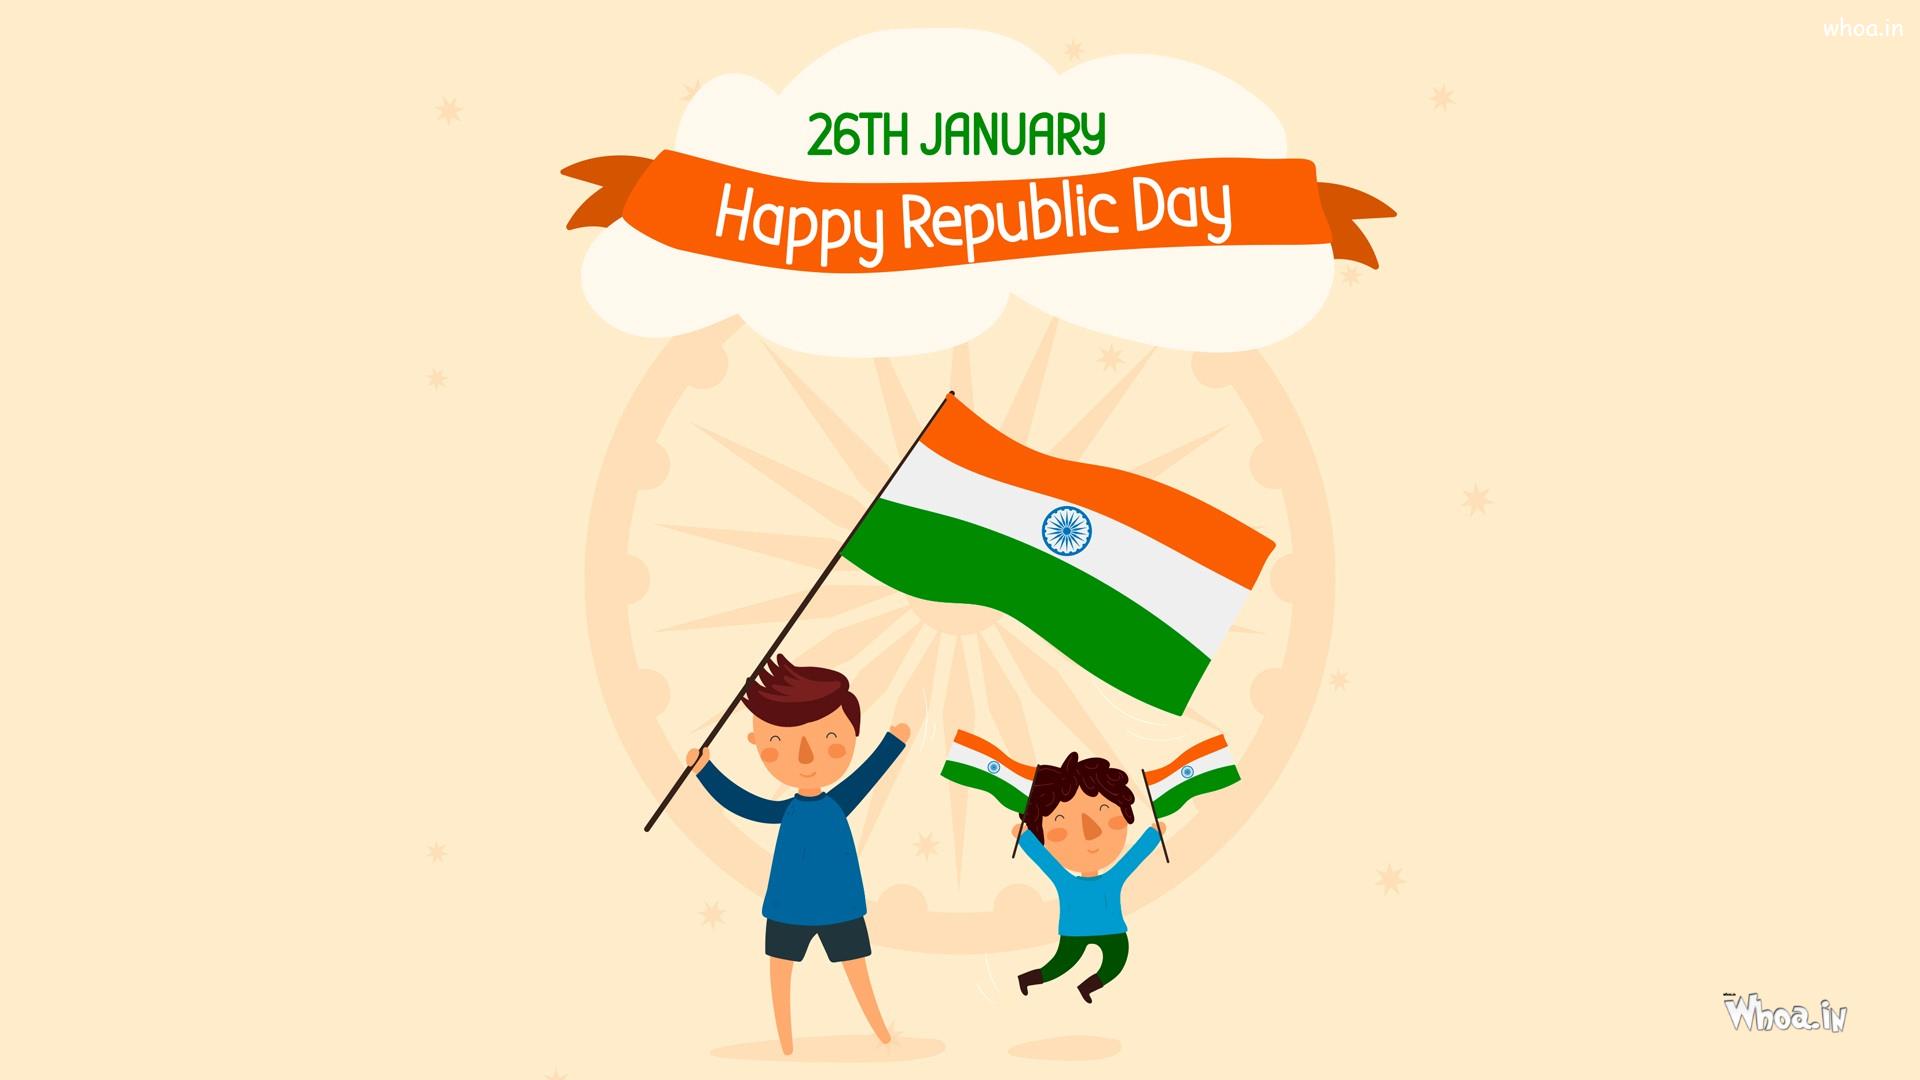 Happy Republic Day 26Th January Image Wallpaper Republic Day Wallpaper